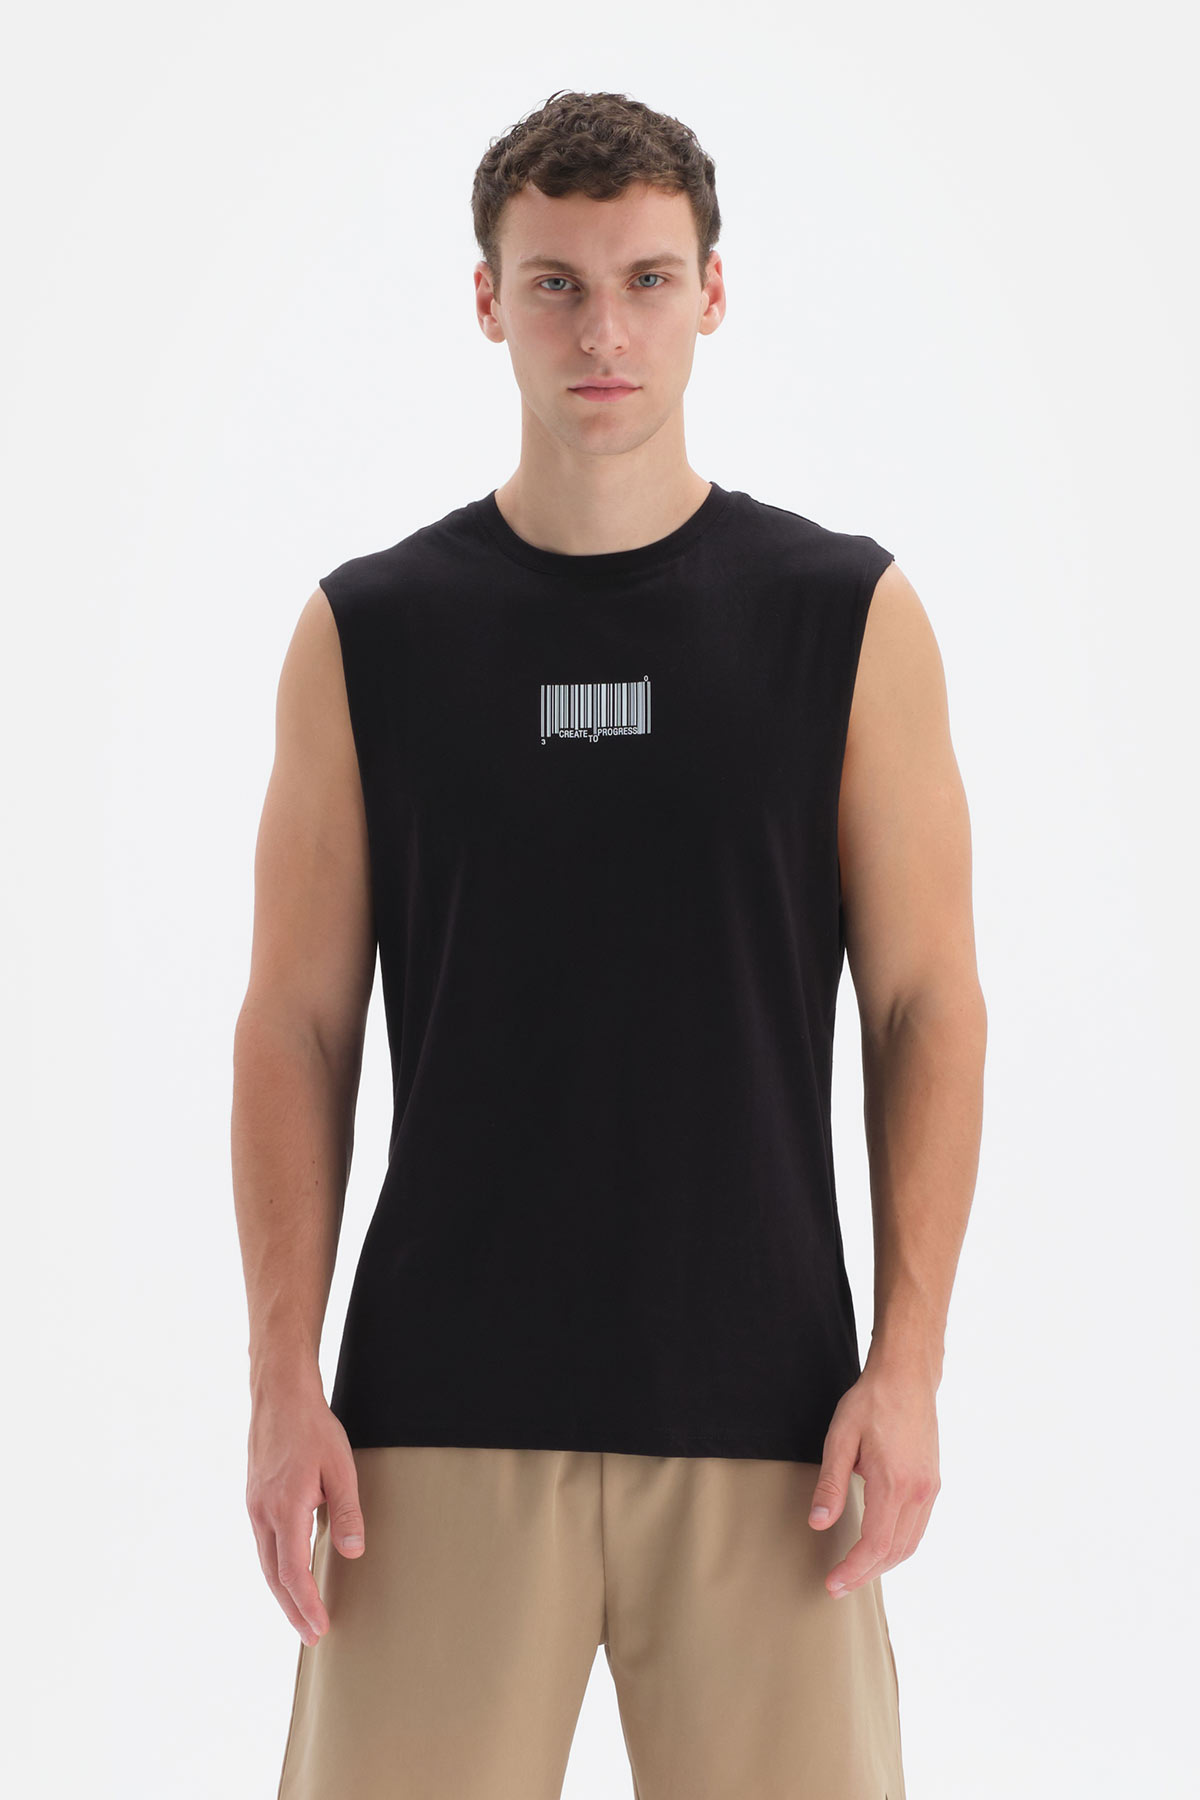 DAGİ Black T-shirt, Crew Neck, Regular Fit, Sleeveless Activewear for Men